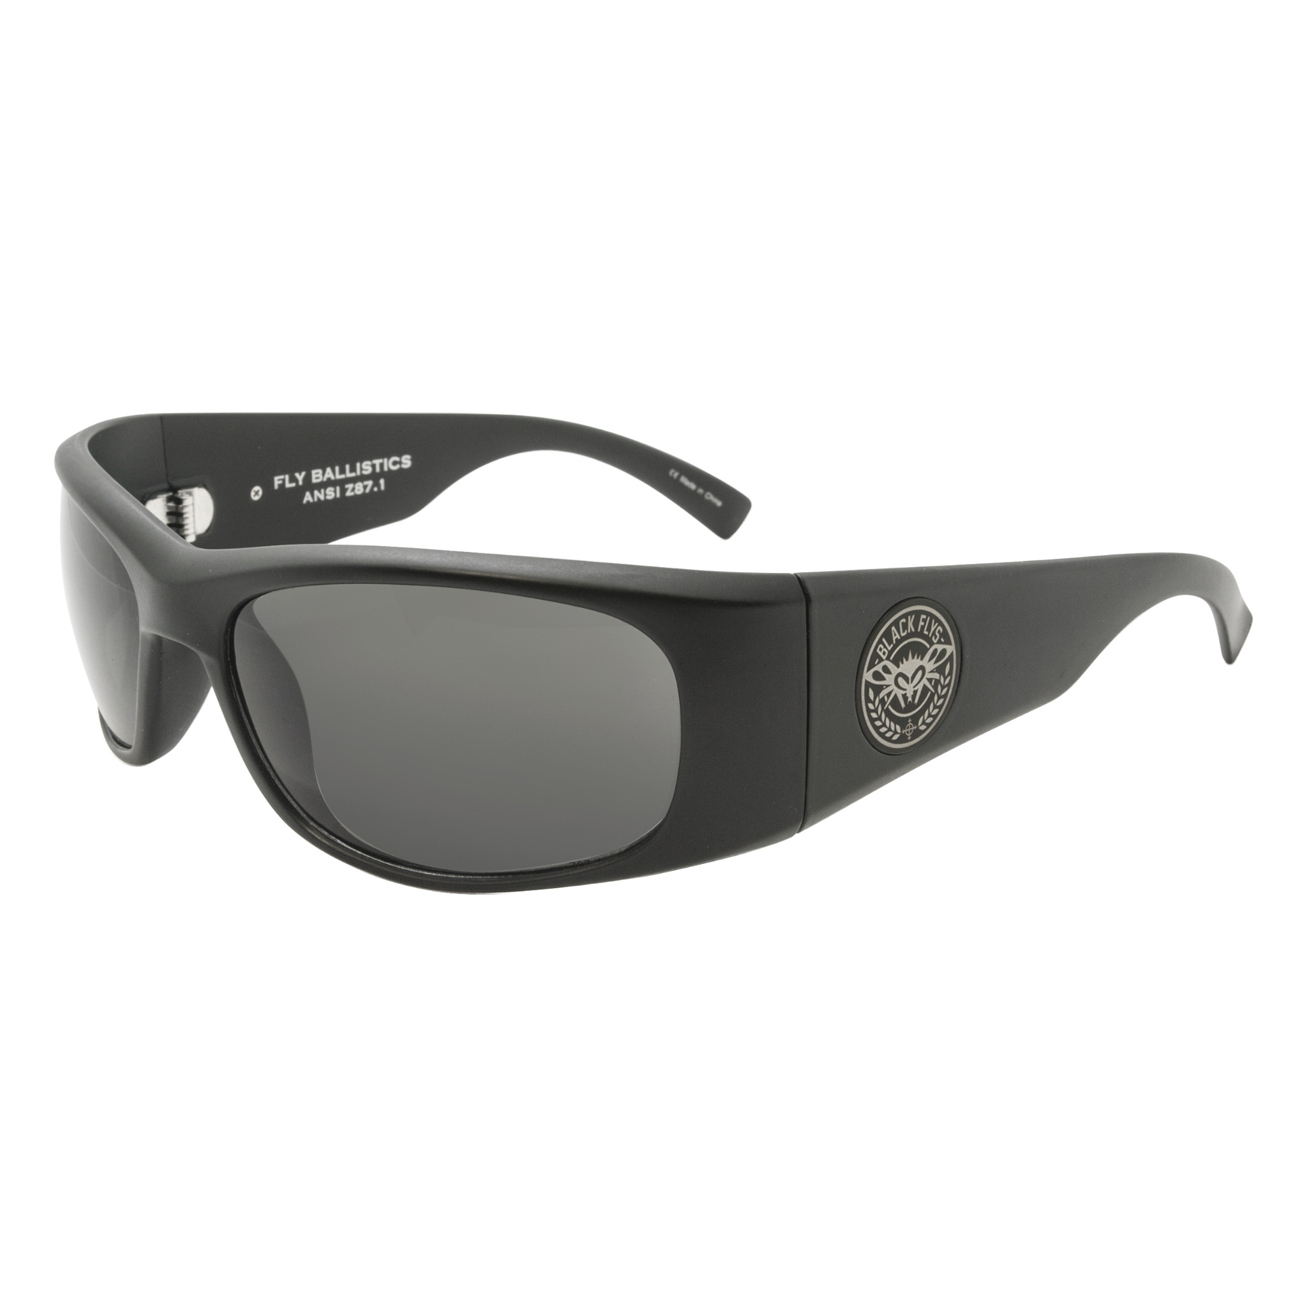 Sunglasses Fly Ballistics - matte black | Black Flys